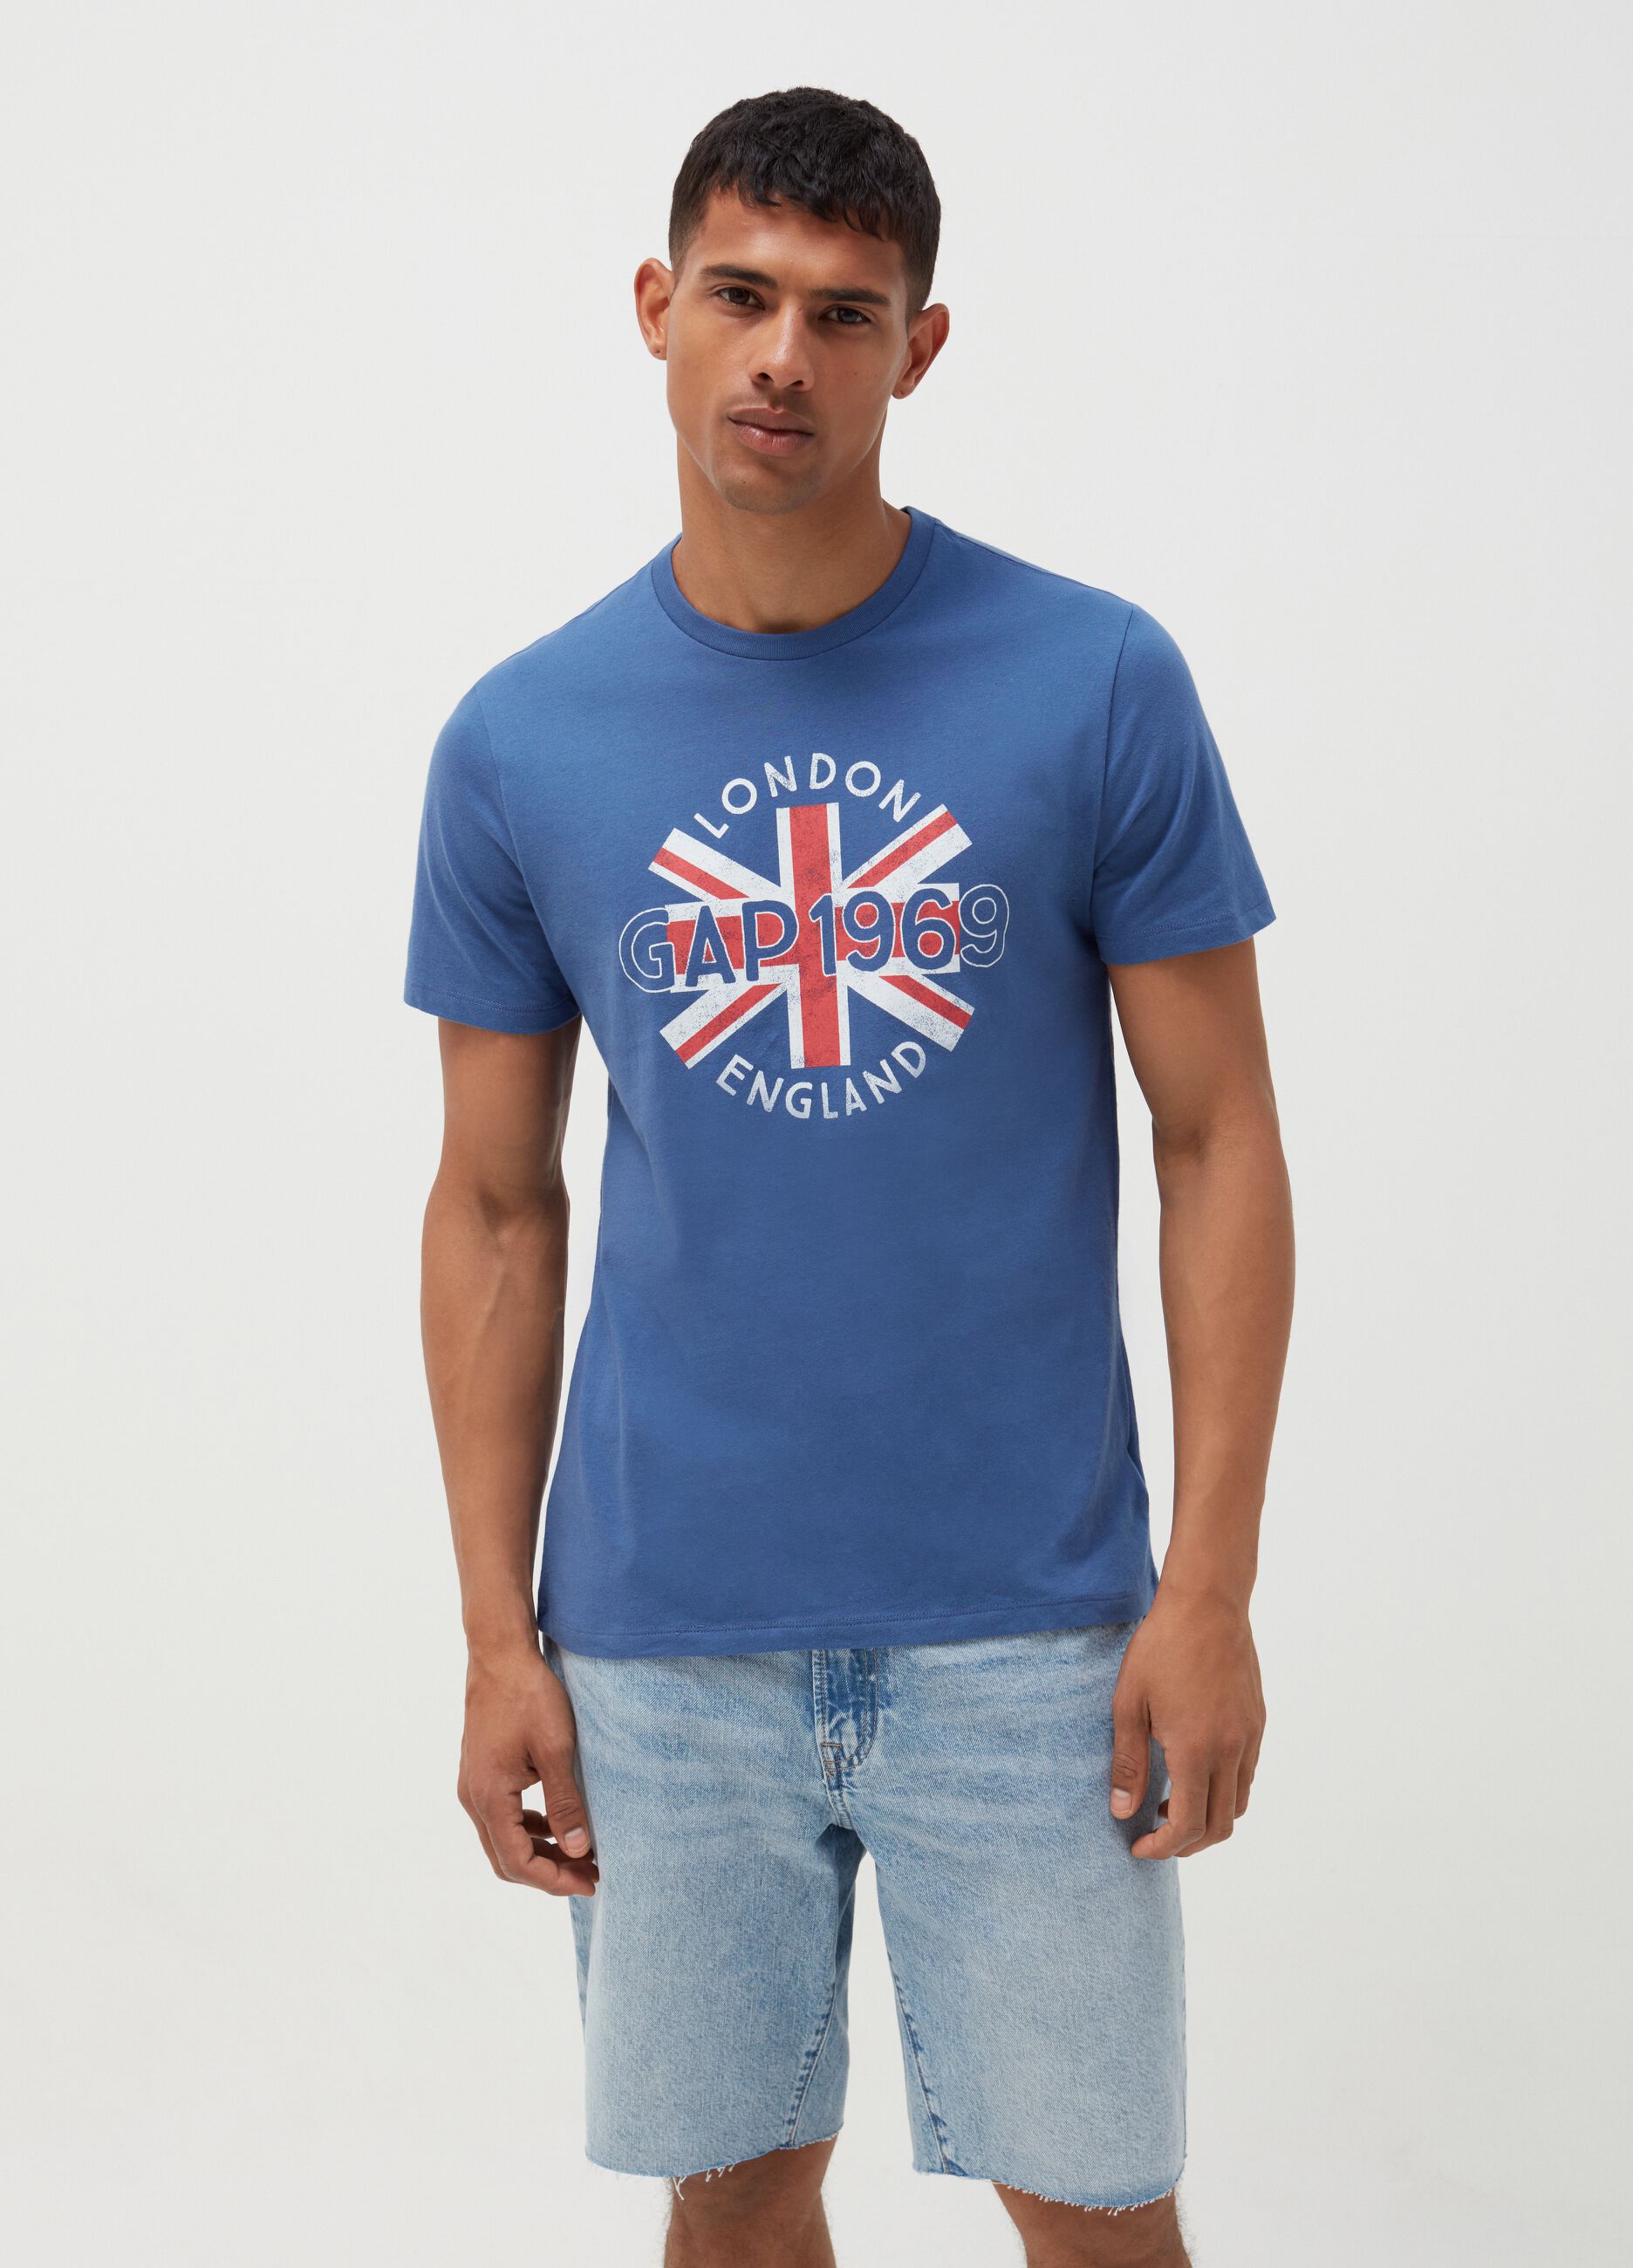 Round-neck T-shirt with Union Jack print